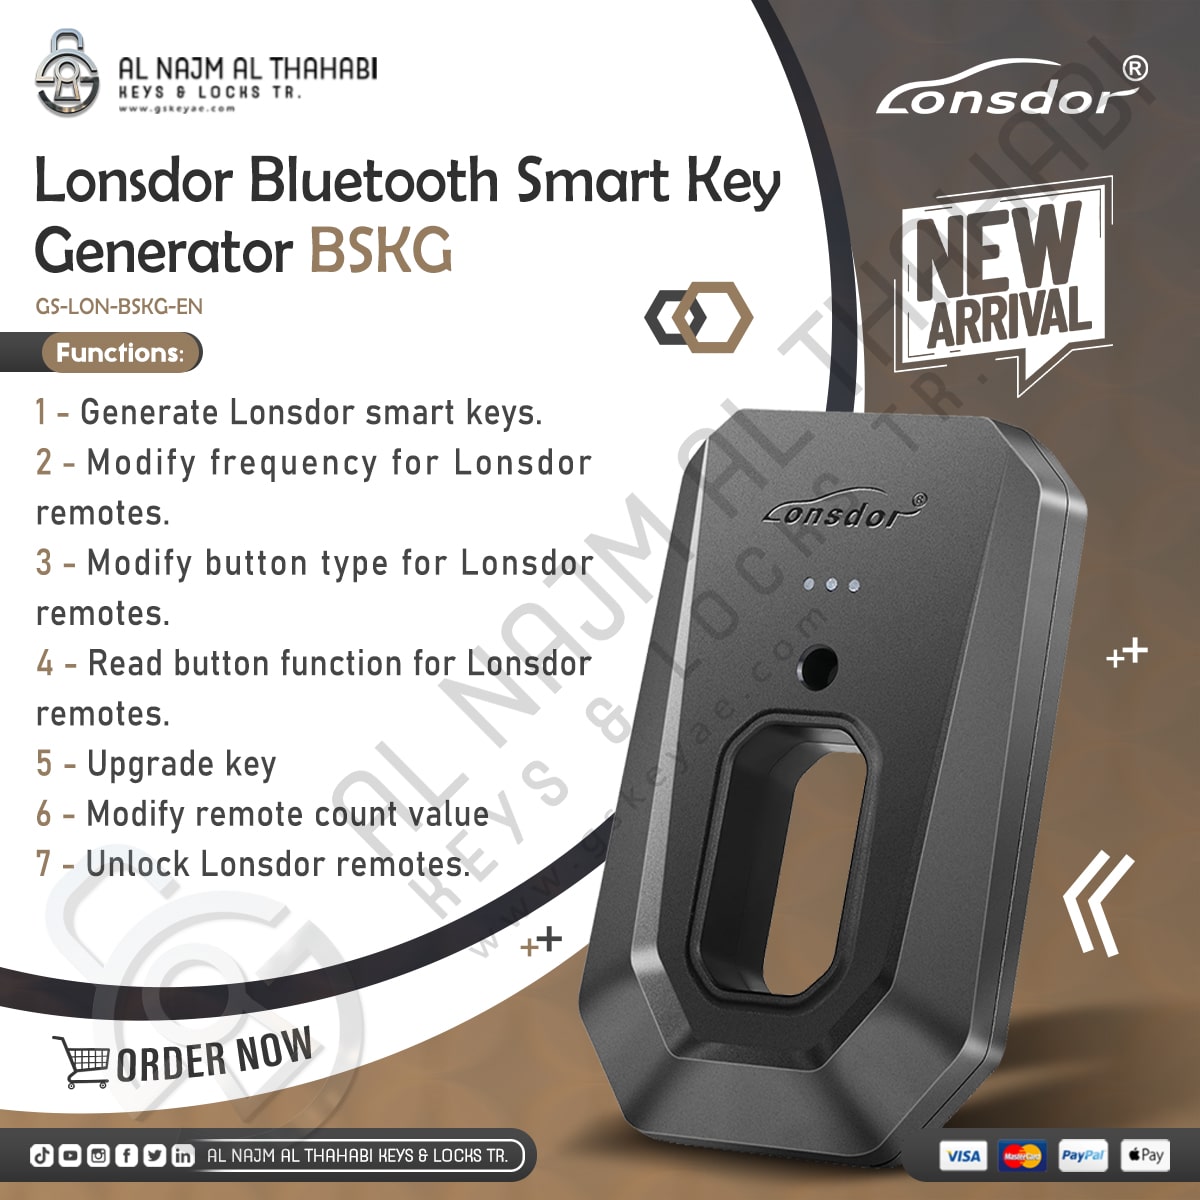 Lonsdor Bluetooth BSKG Features